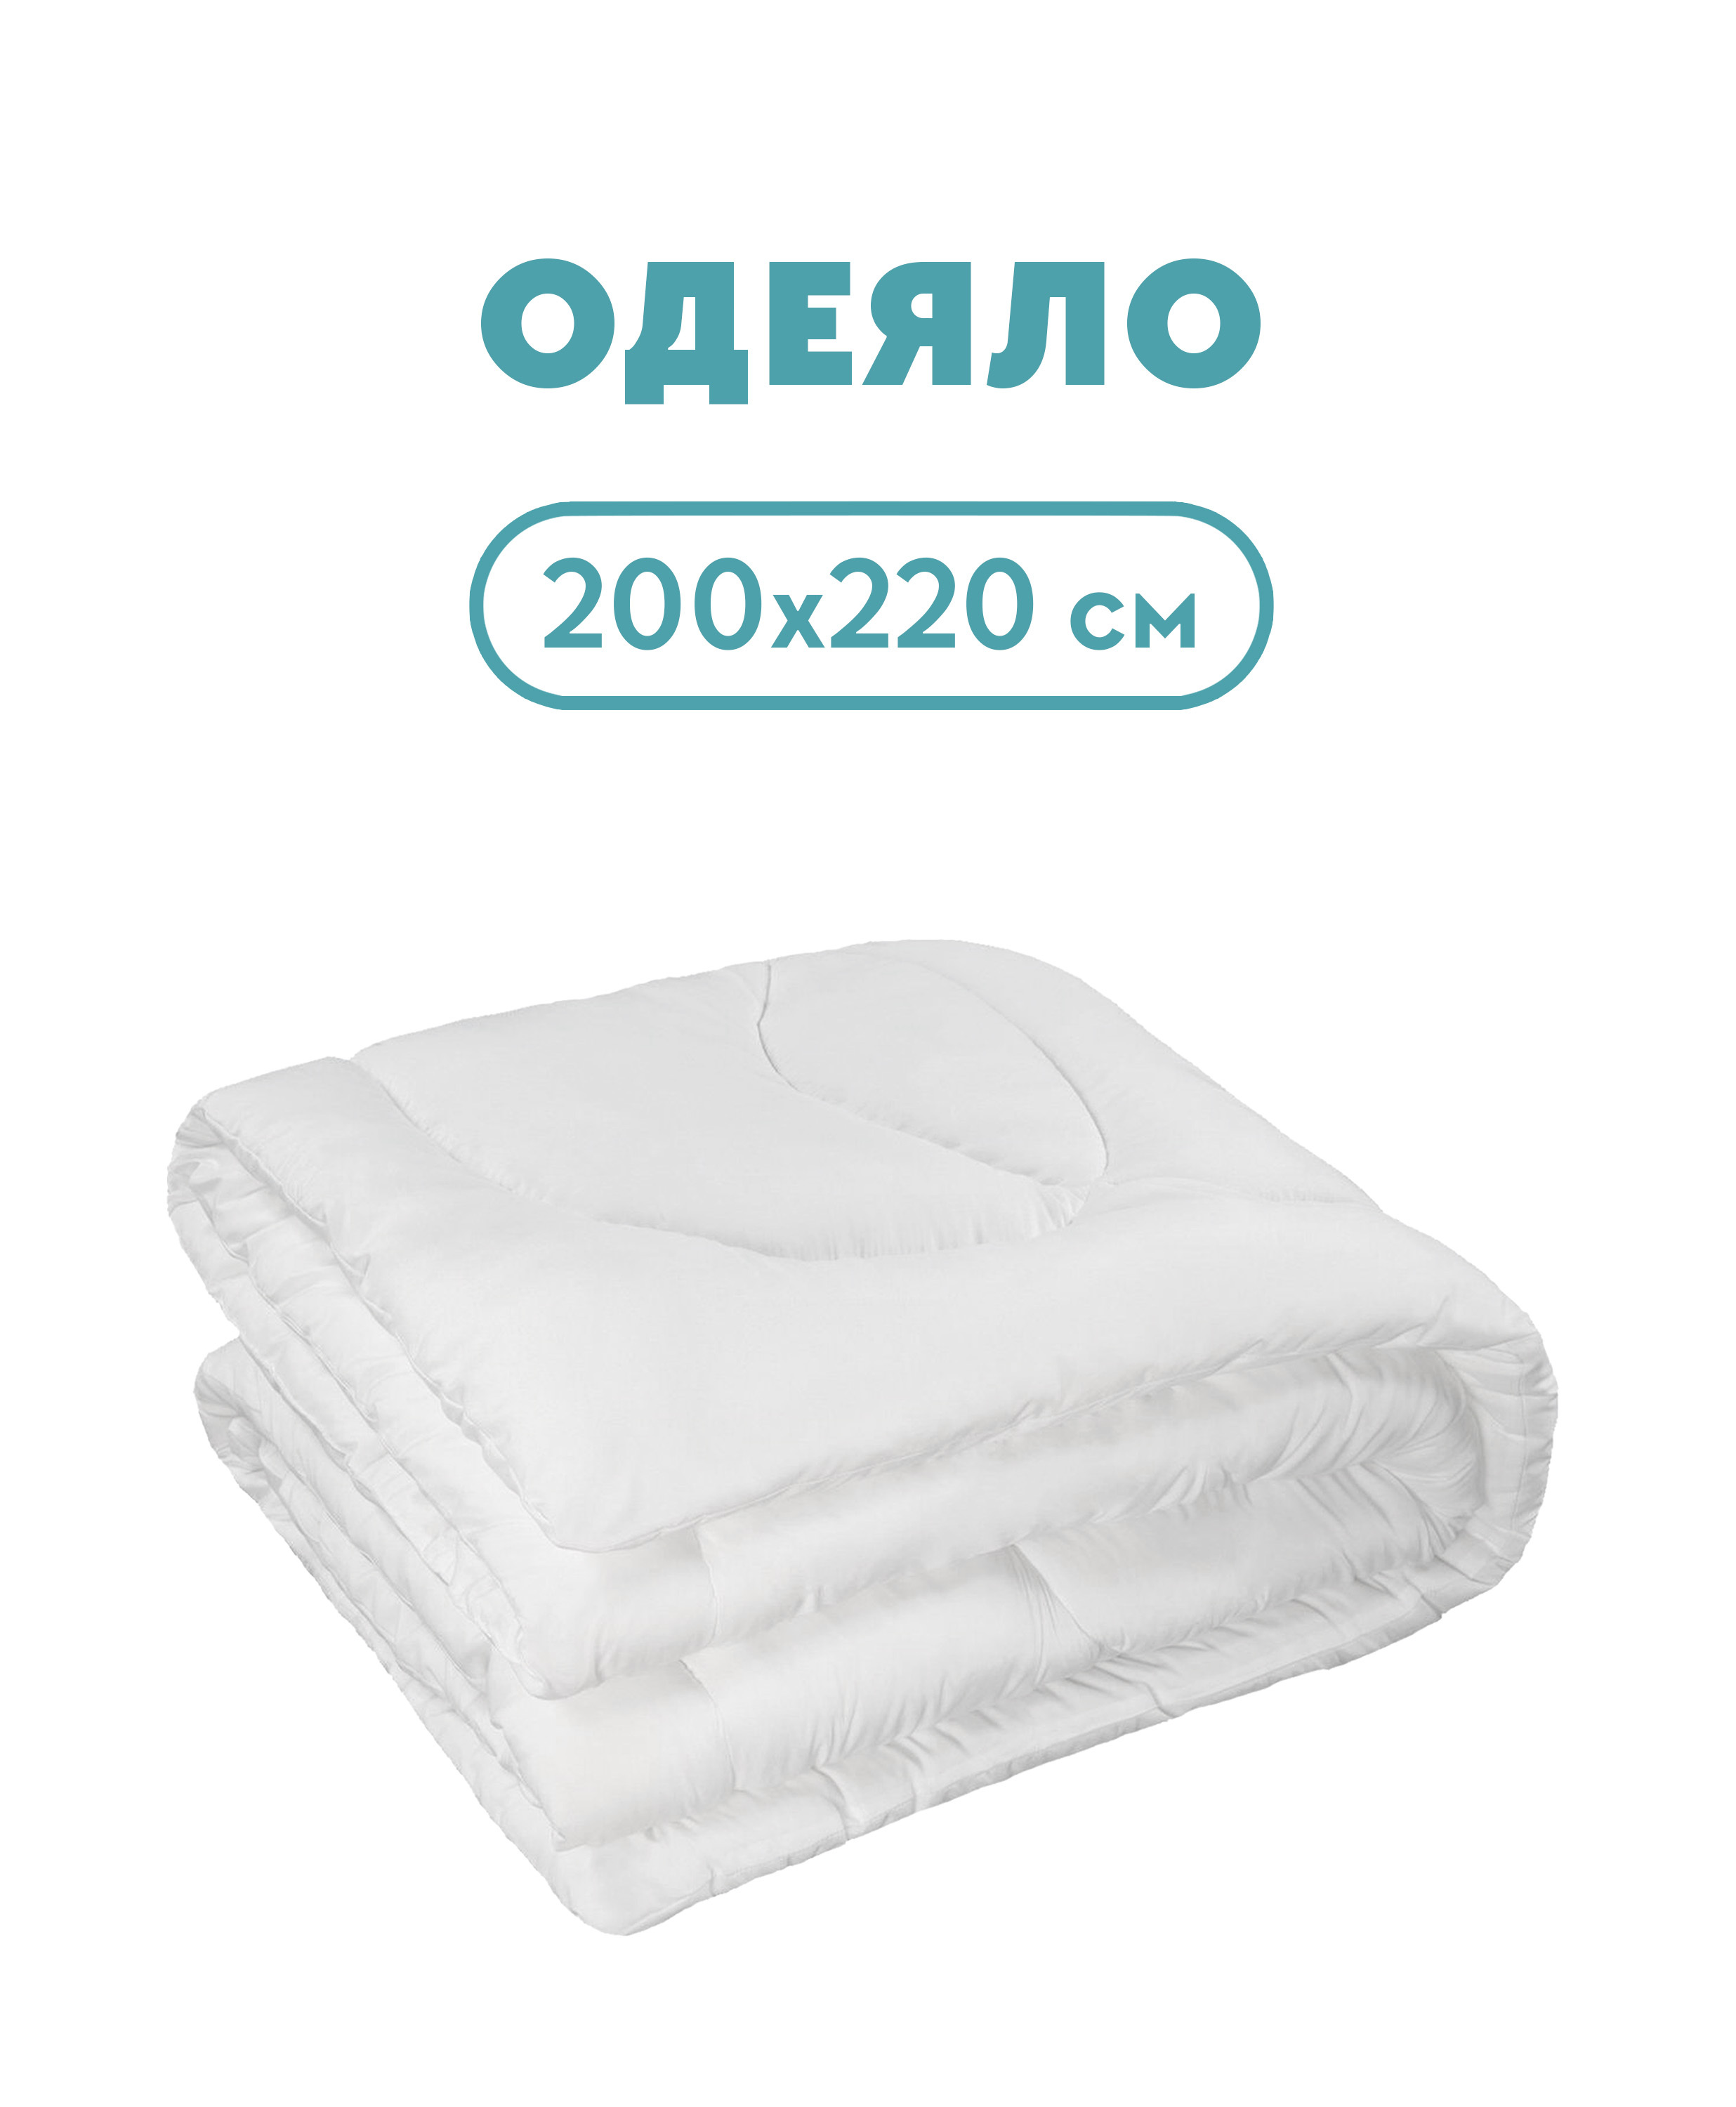 Одеяло лебяжий пух, тик п/э, 200*220, 200 г/м2